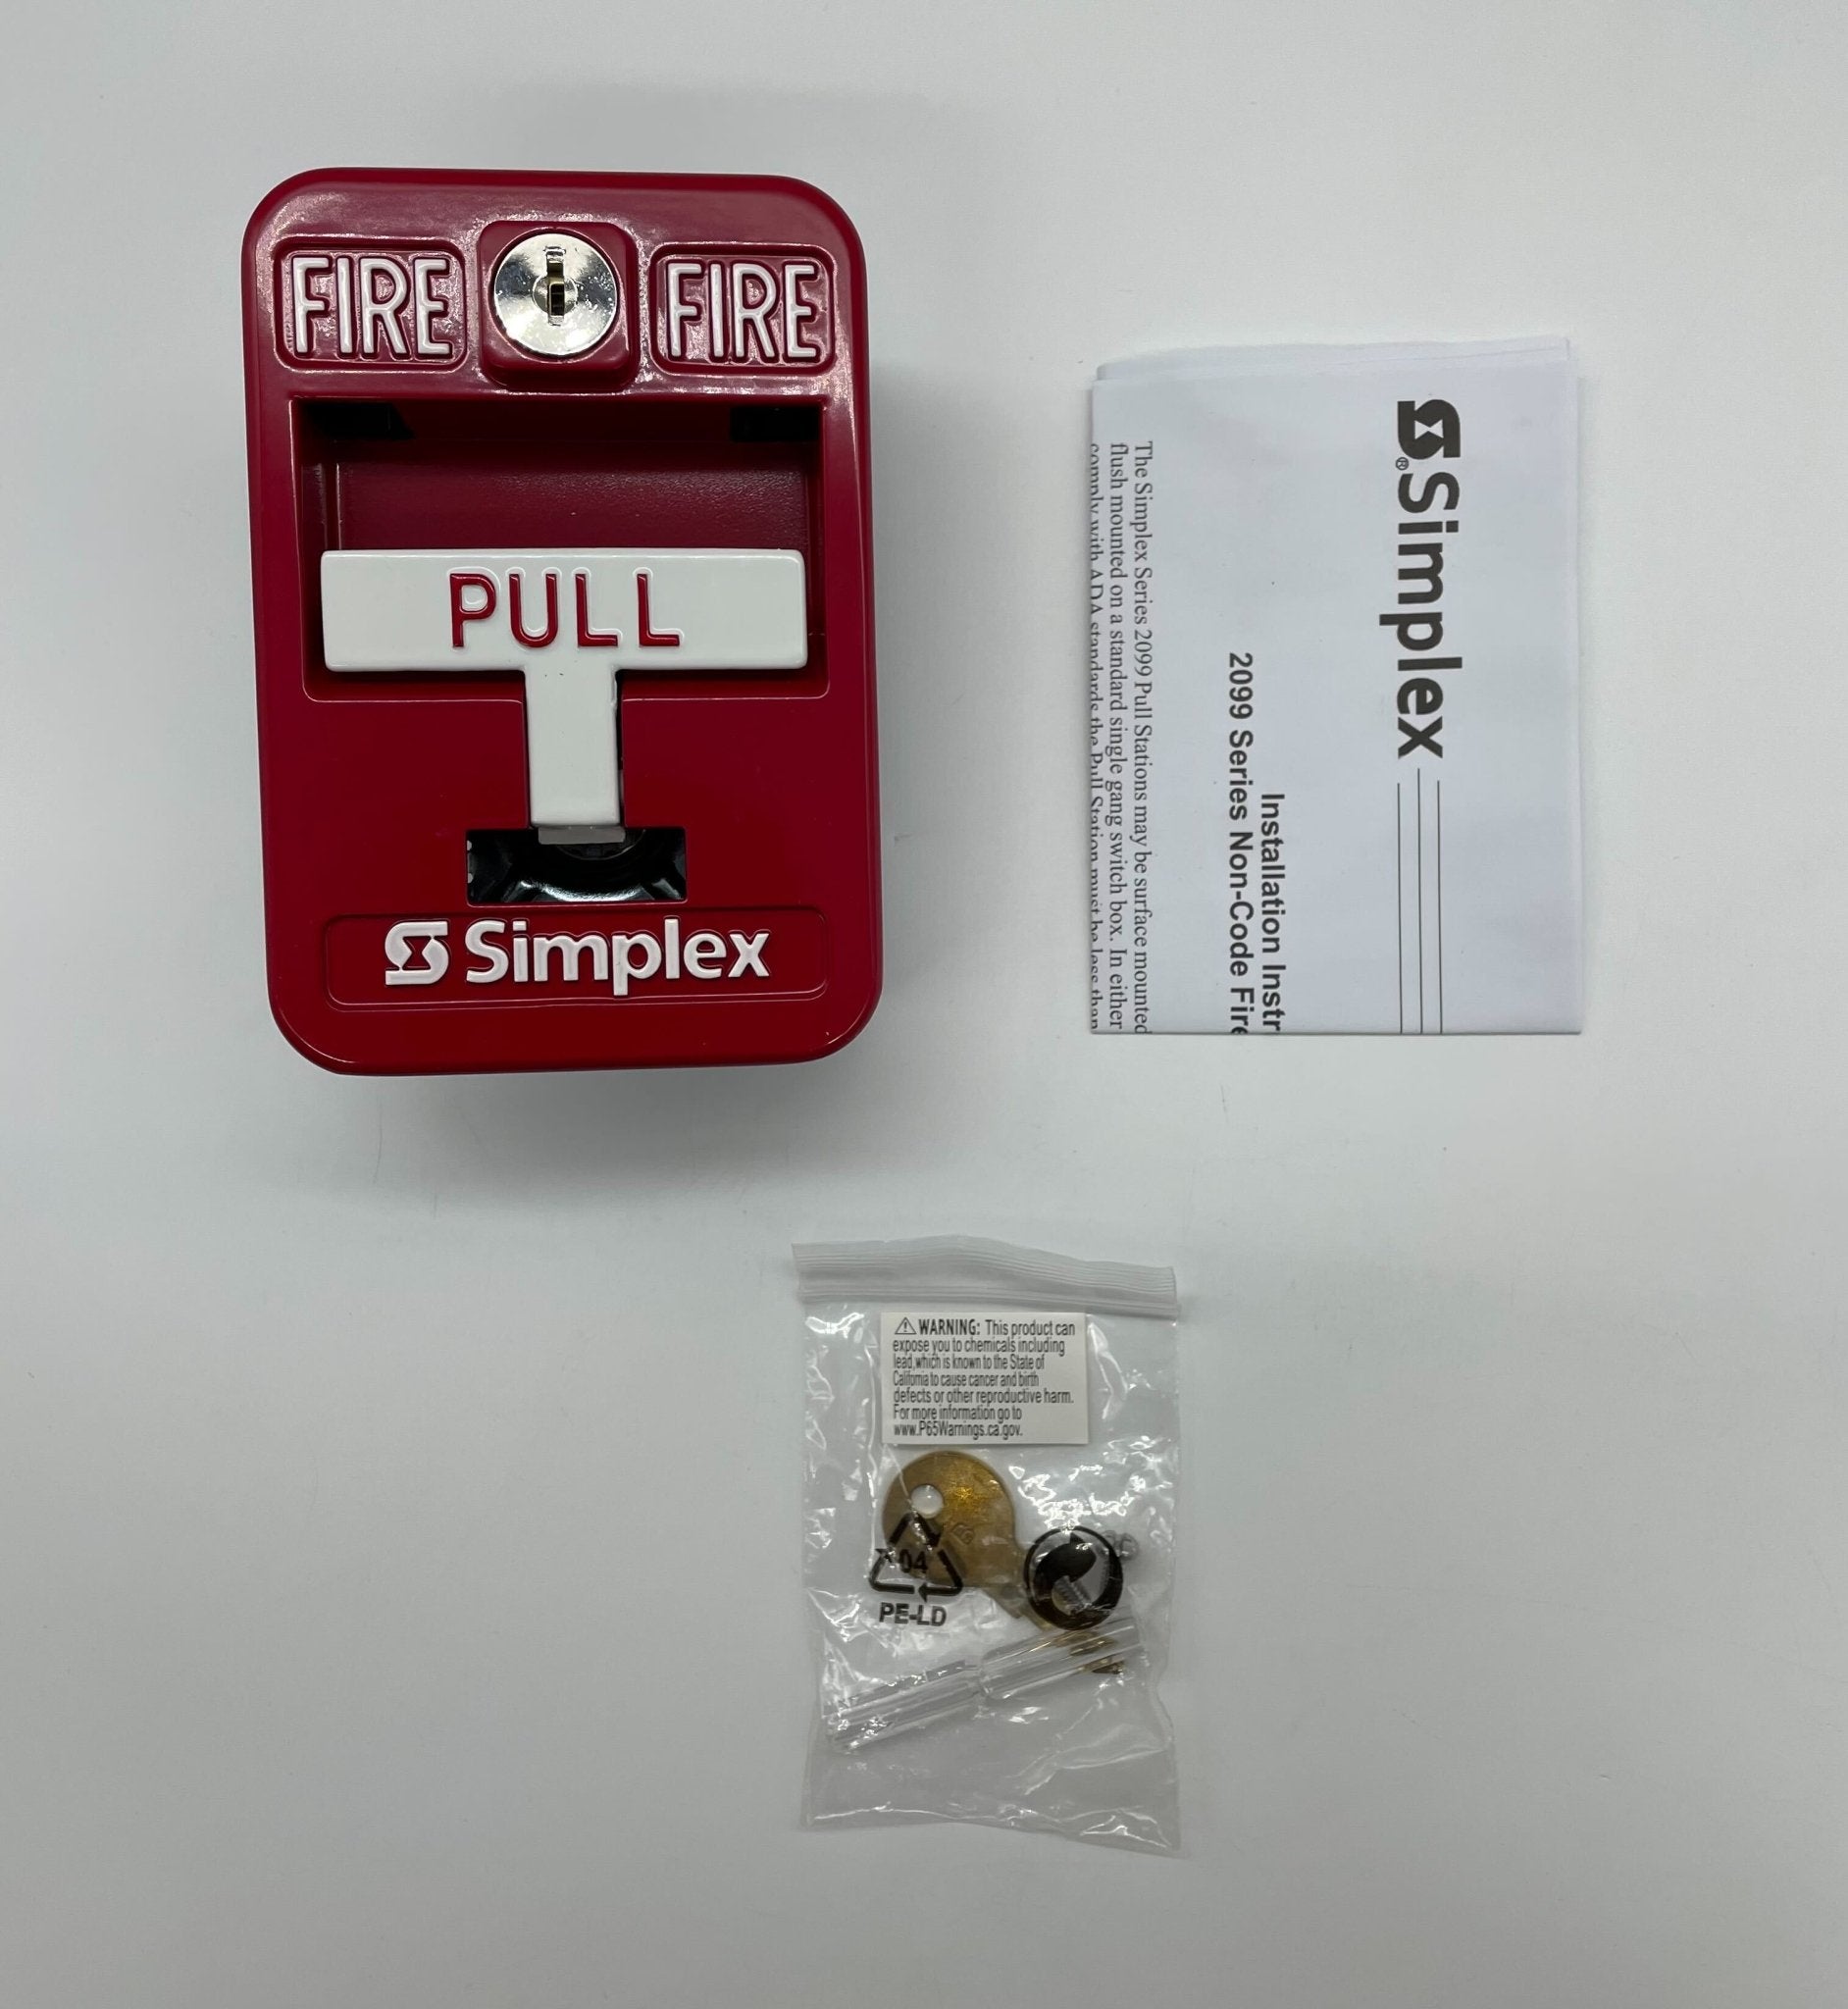 Simplex 2099-9138 - The Fire Alarm Supplier